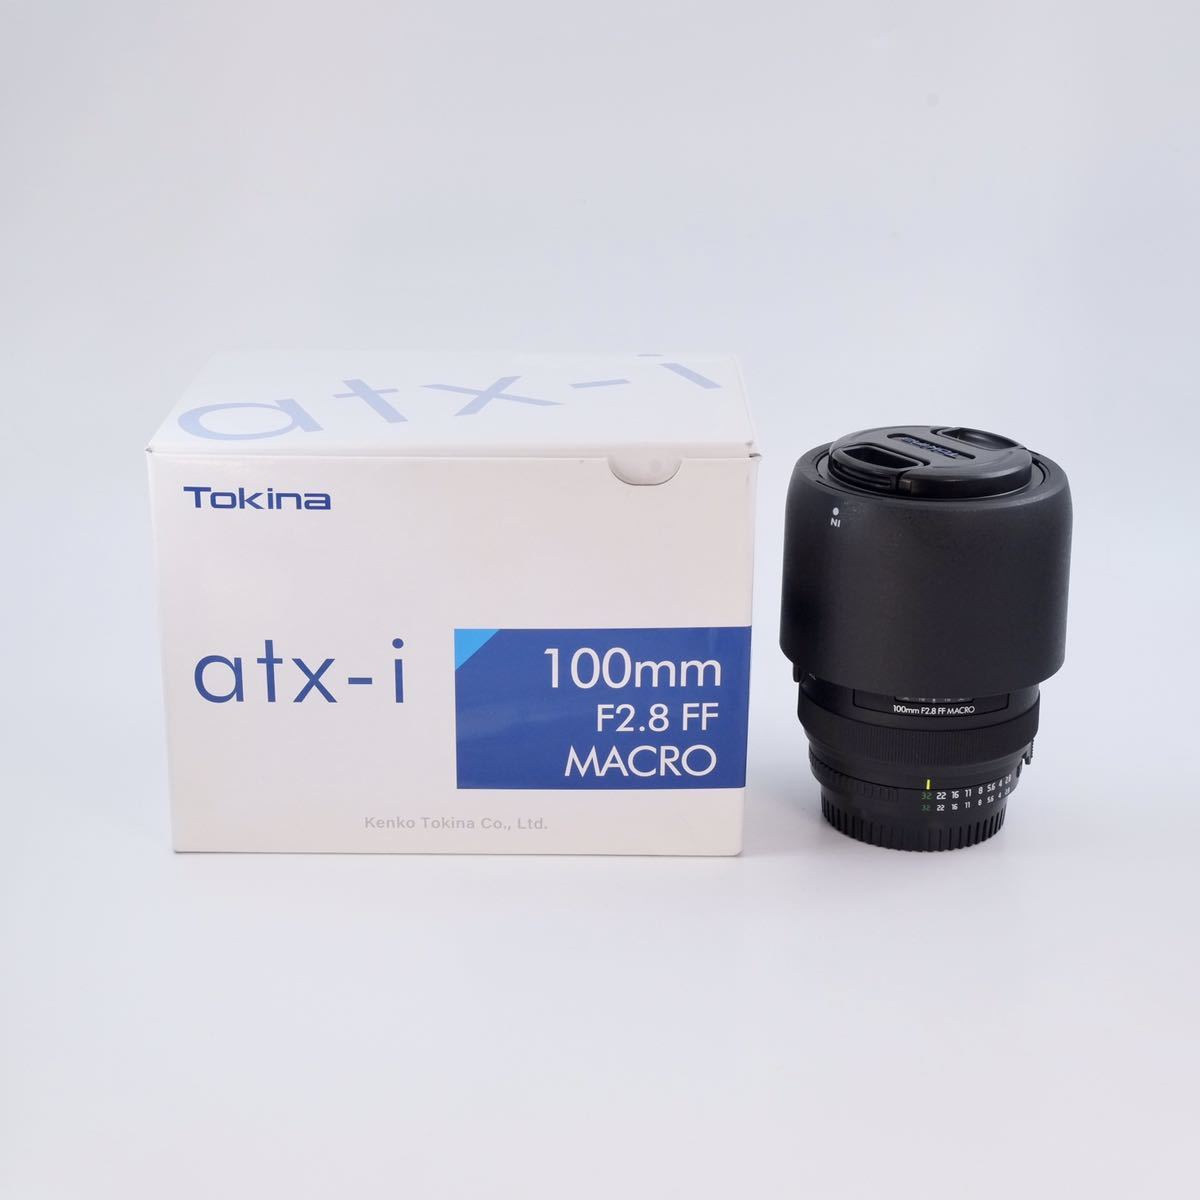 Tokina トキナー atx-i 100mm 1:2.8 FF MACRO Nikon ニコン用AFマクロ